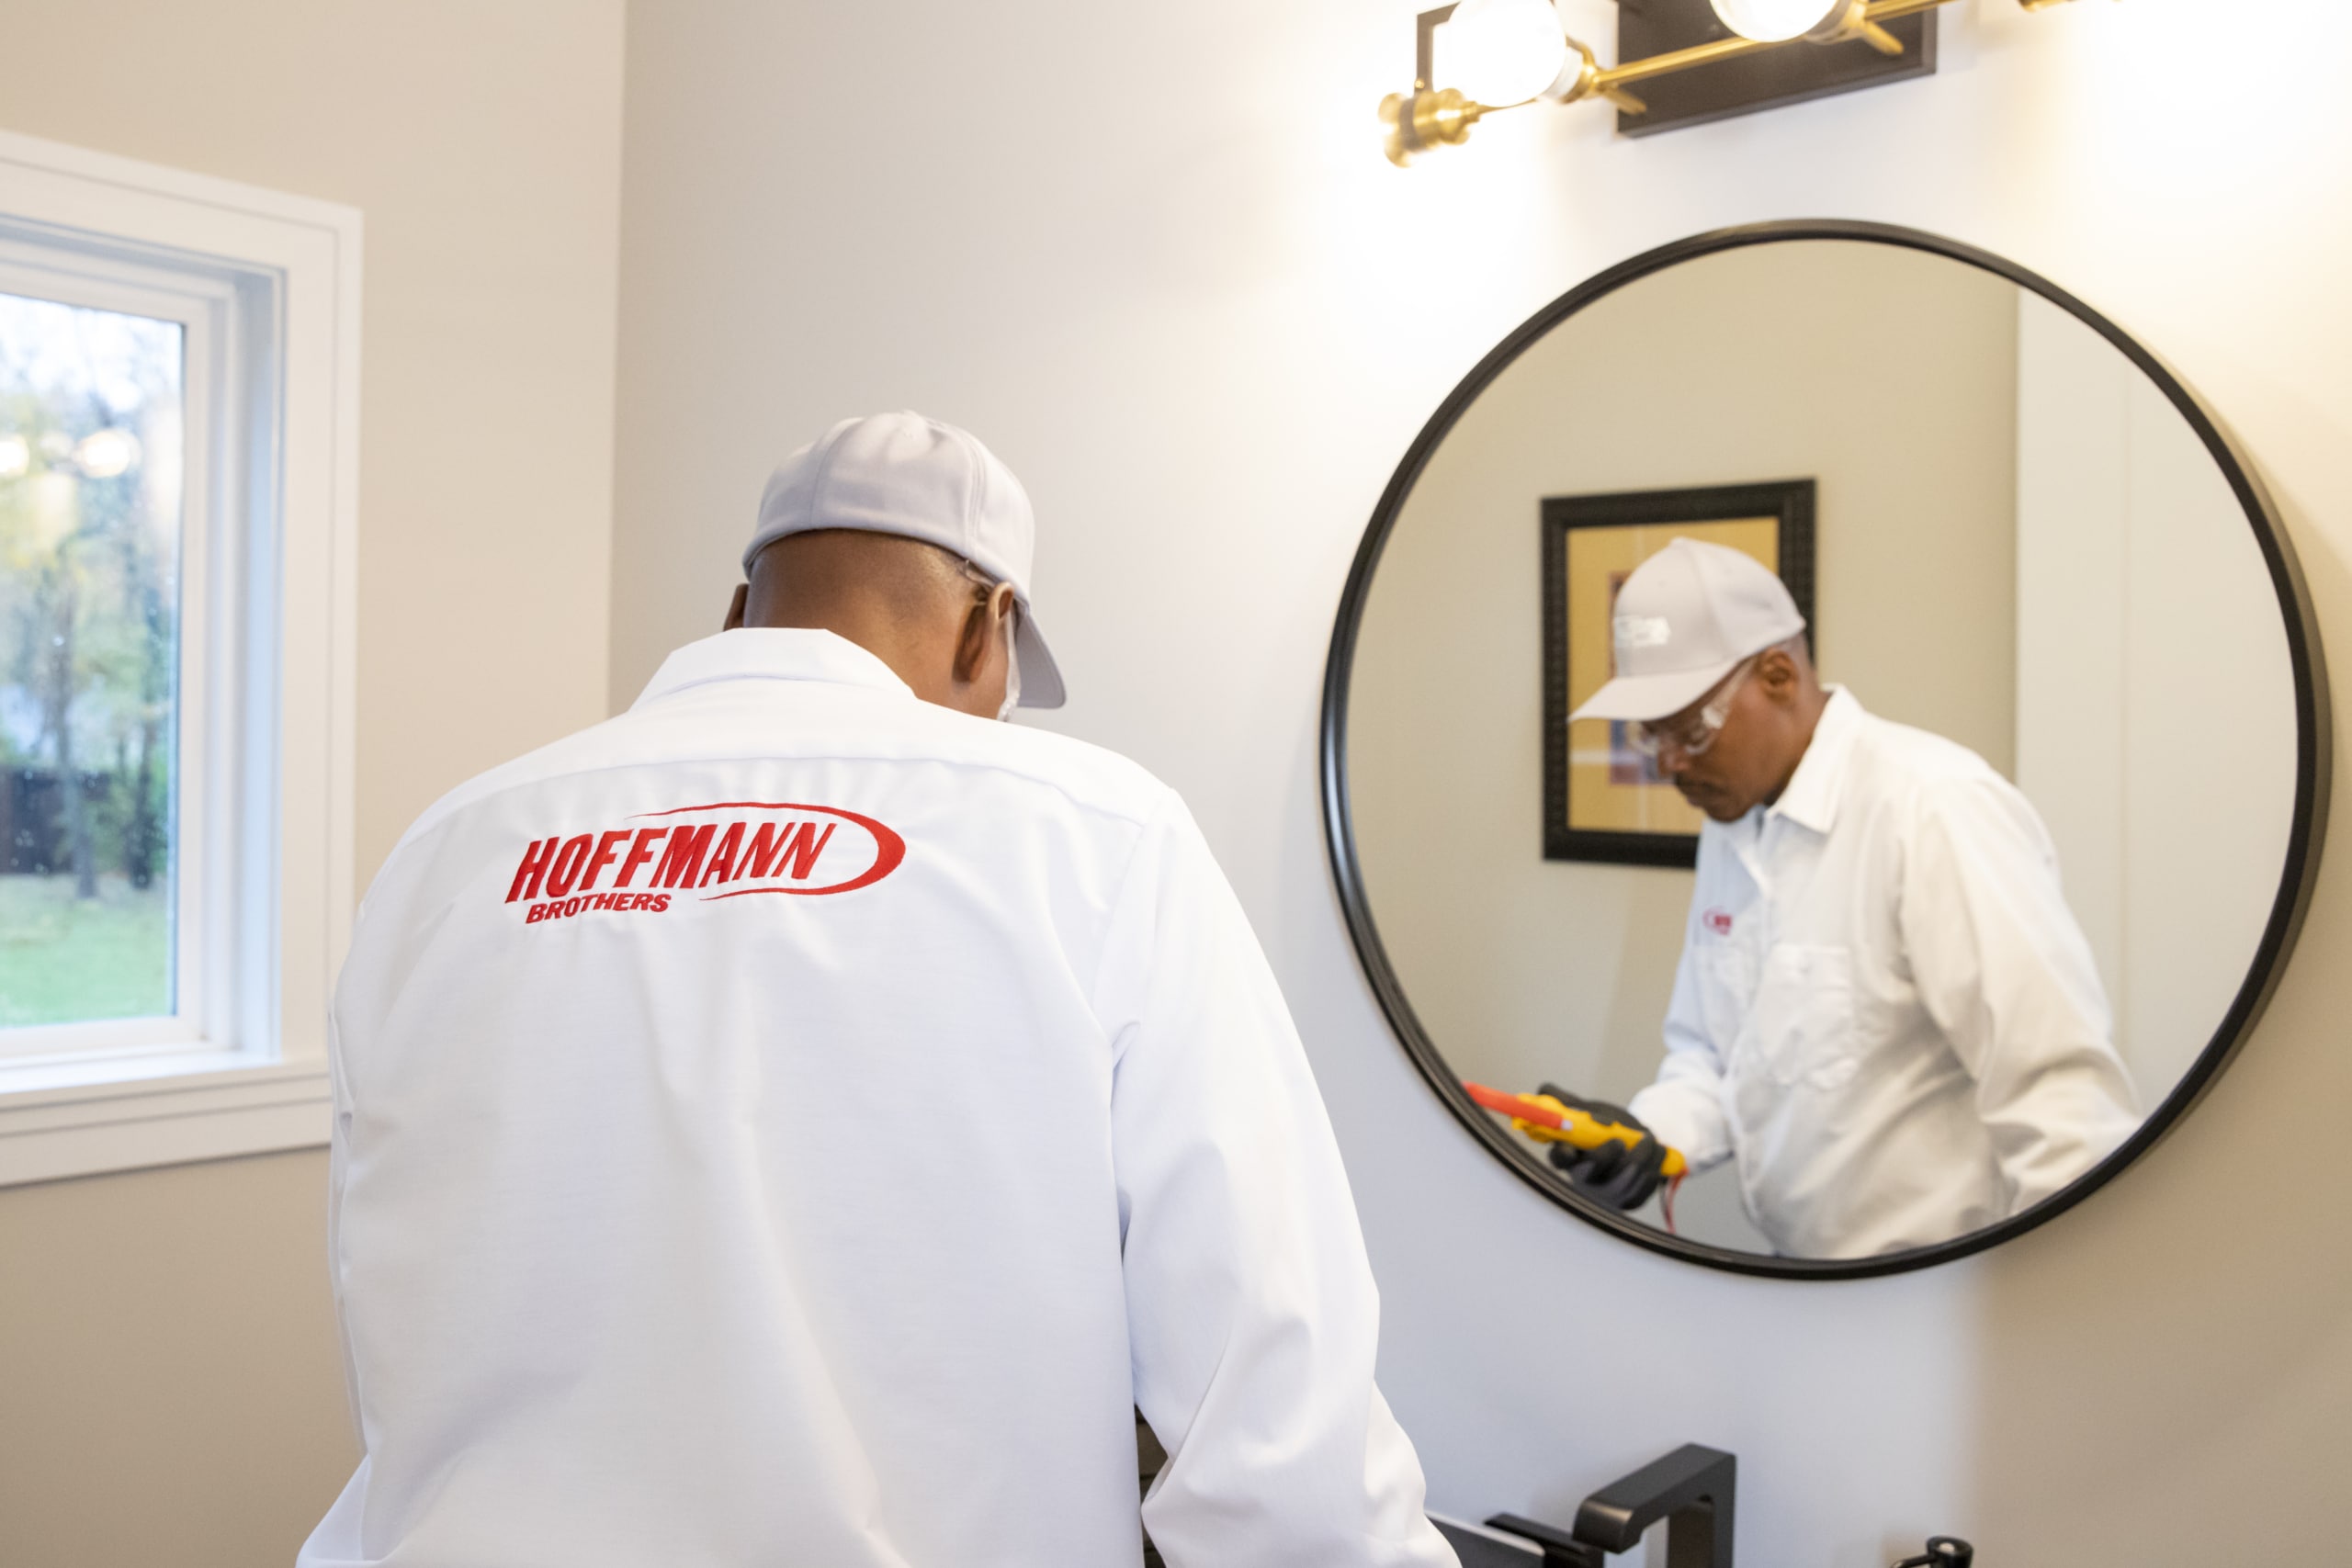 hoffmann electrician replacing electrical wiring in St Louis bathroom